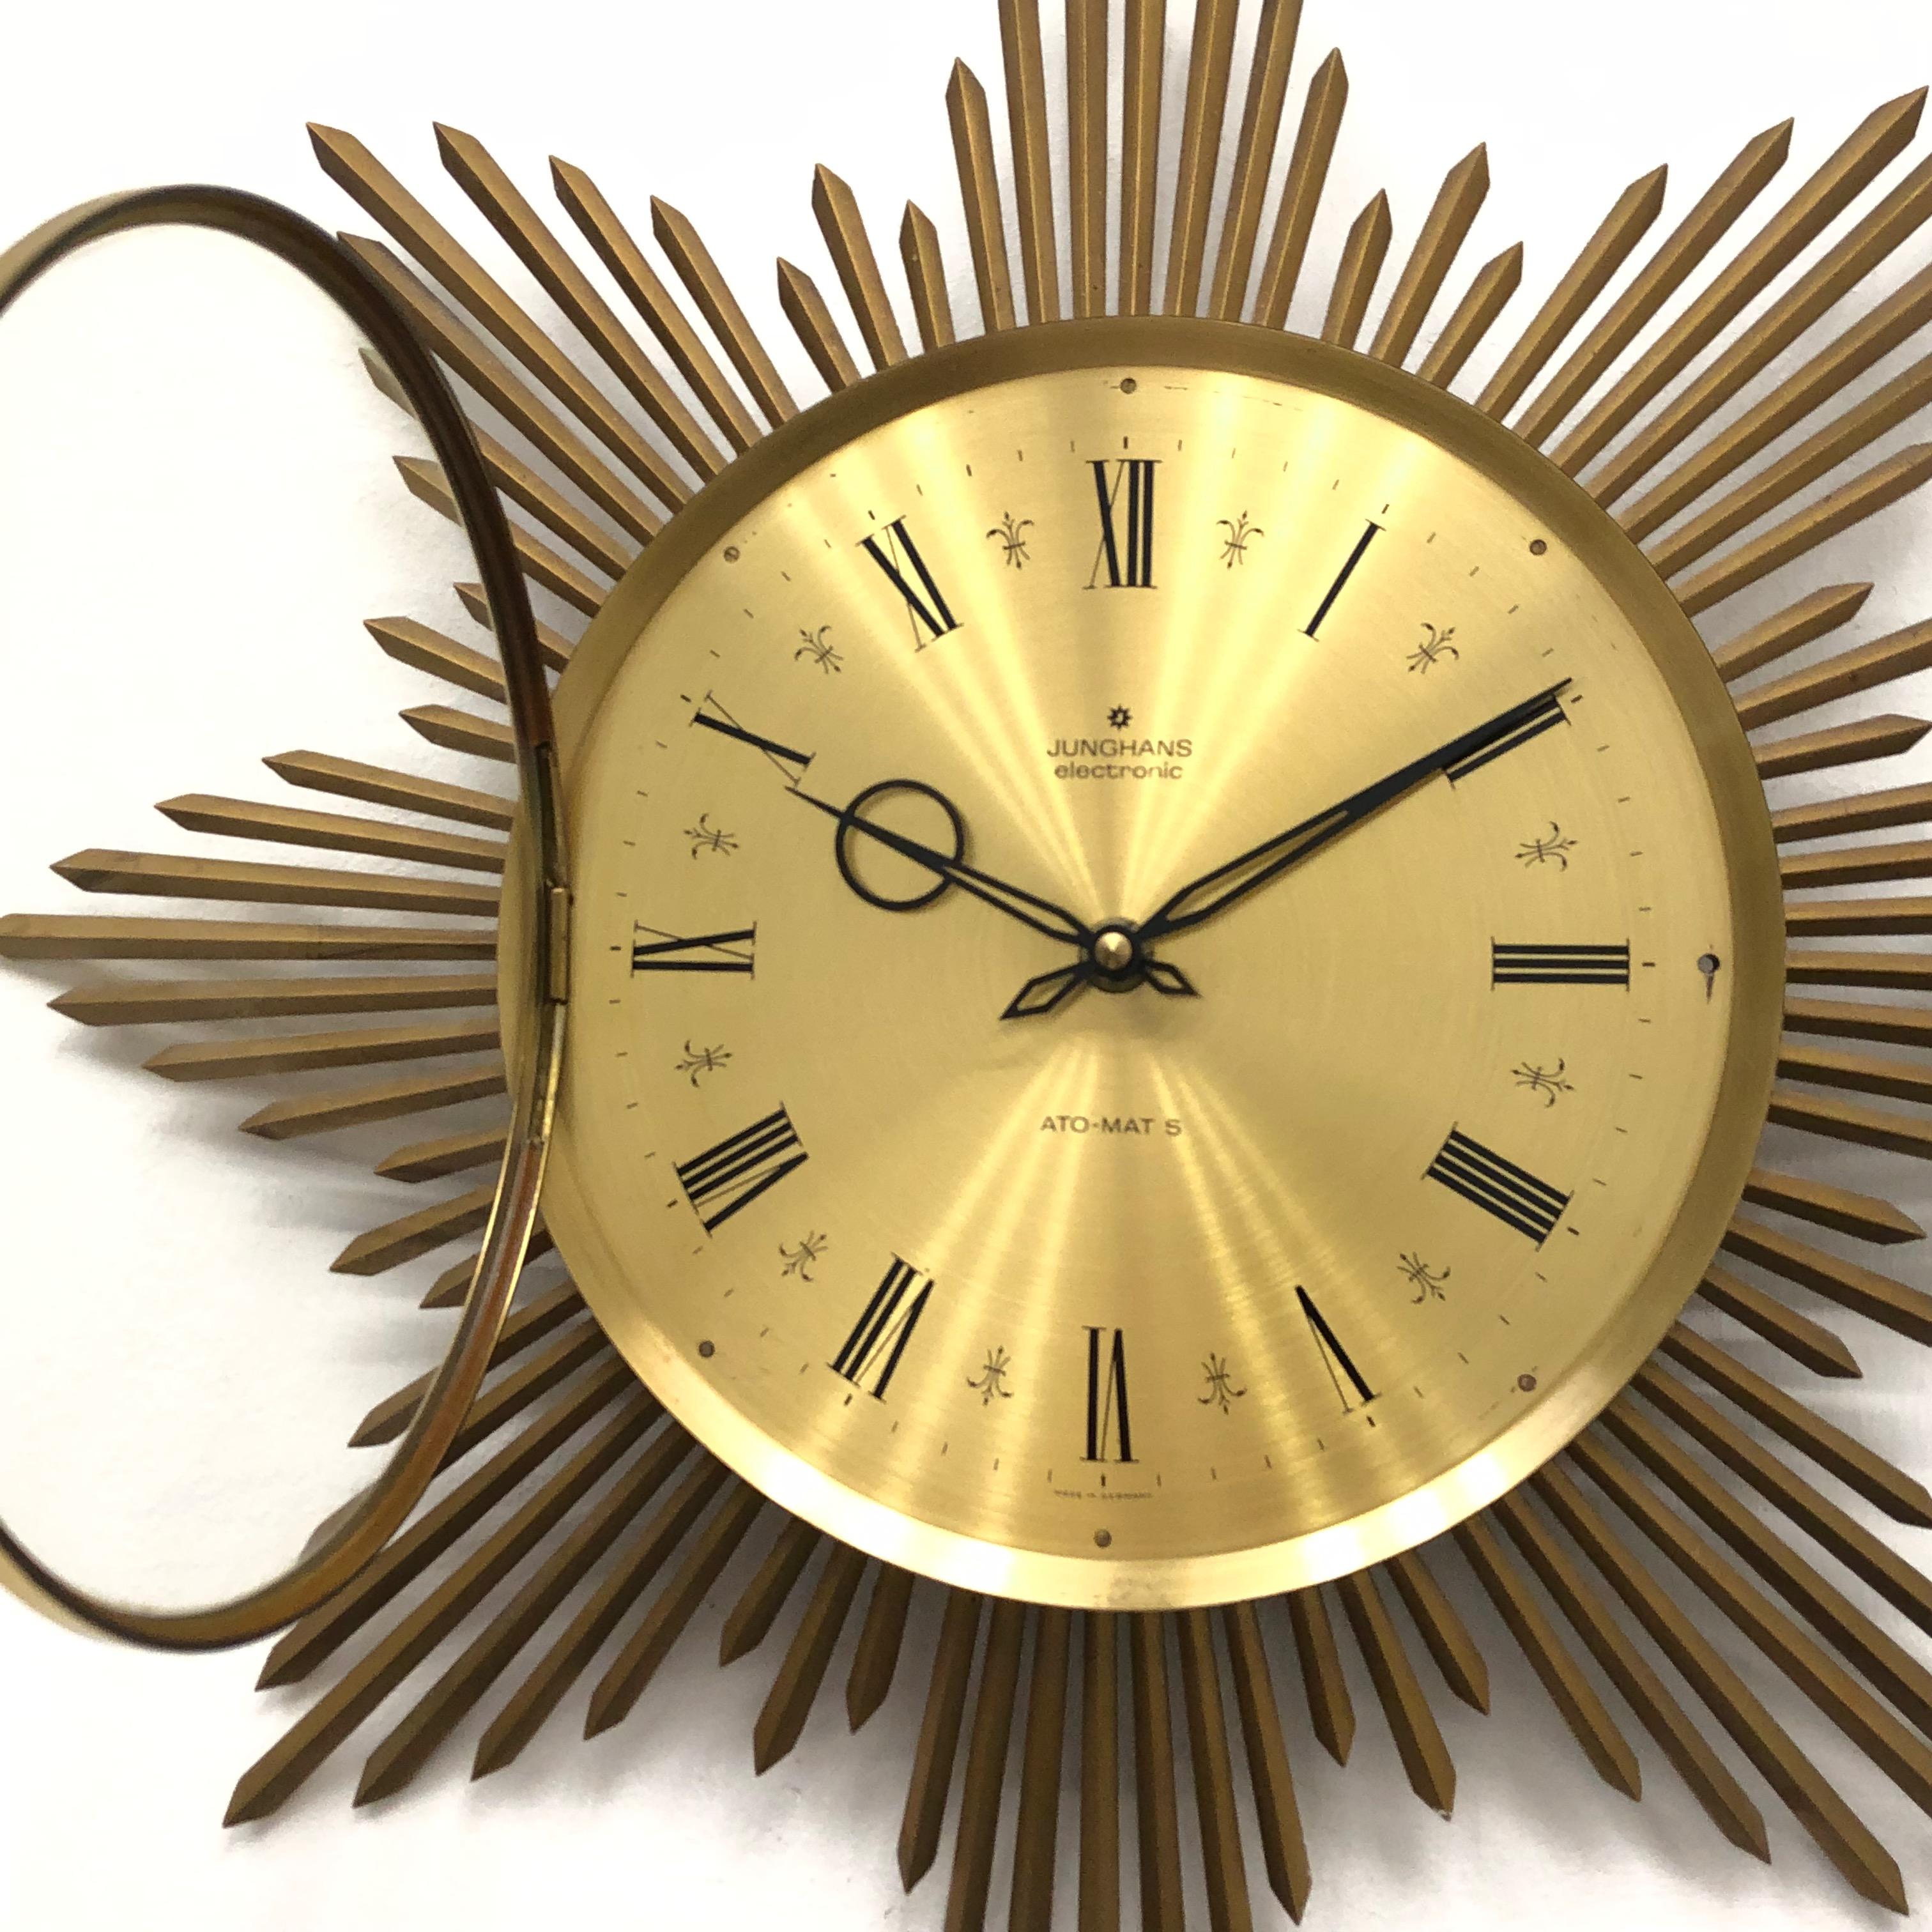 Allemand Stylish Vintage Midcentury Junghans Sunburst Starburst Brass Wall Clock Ato-Mat